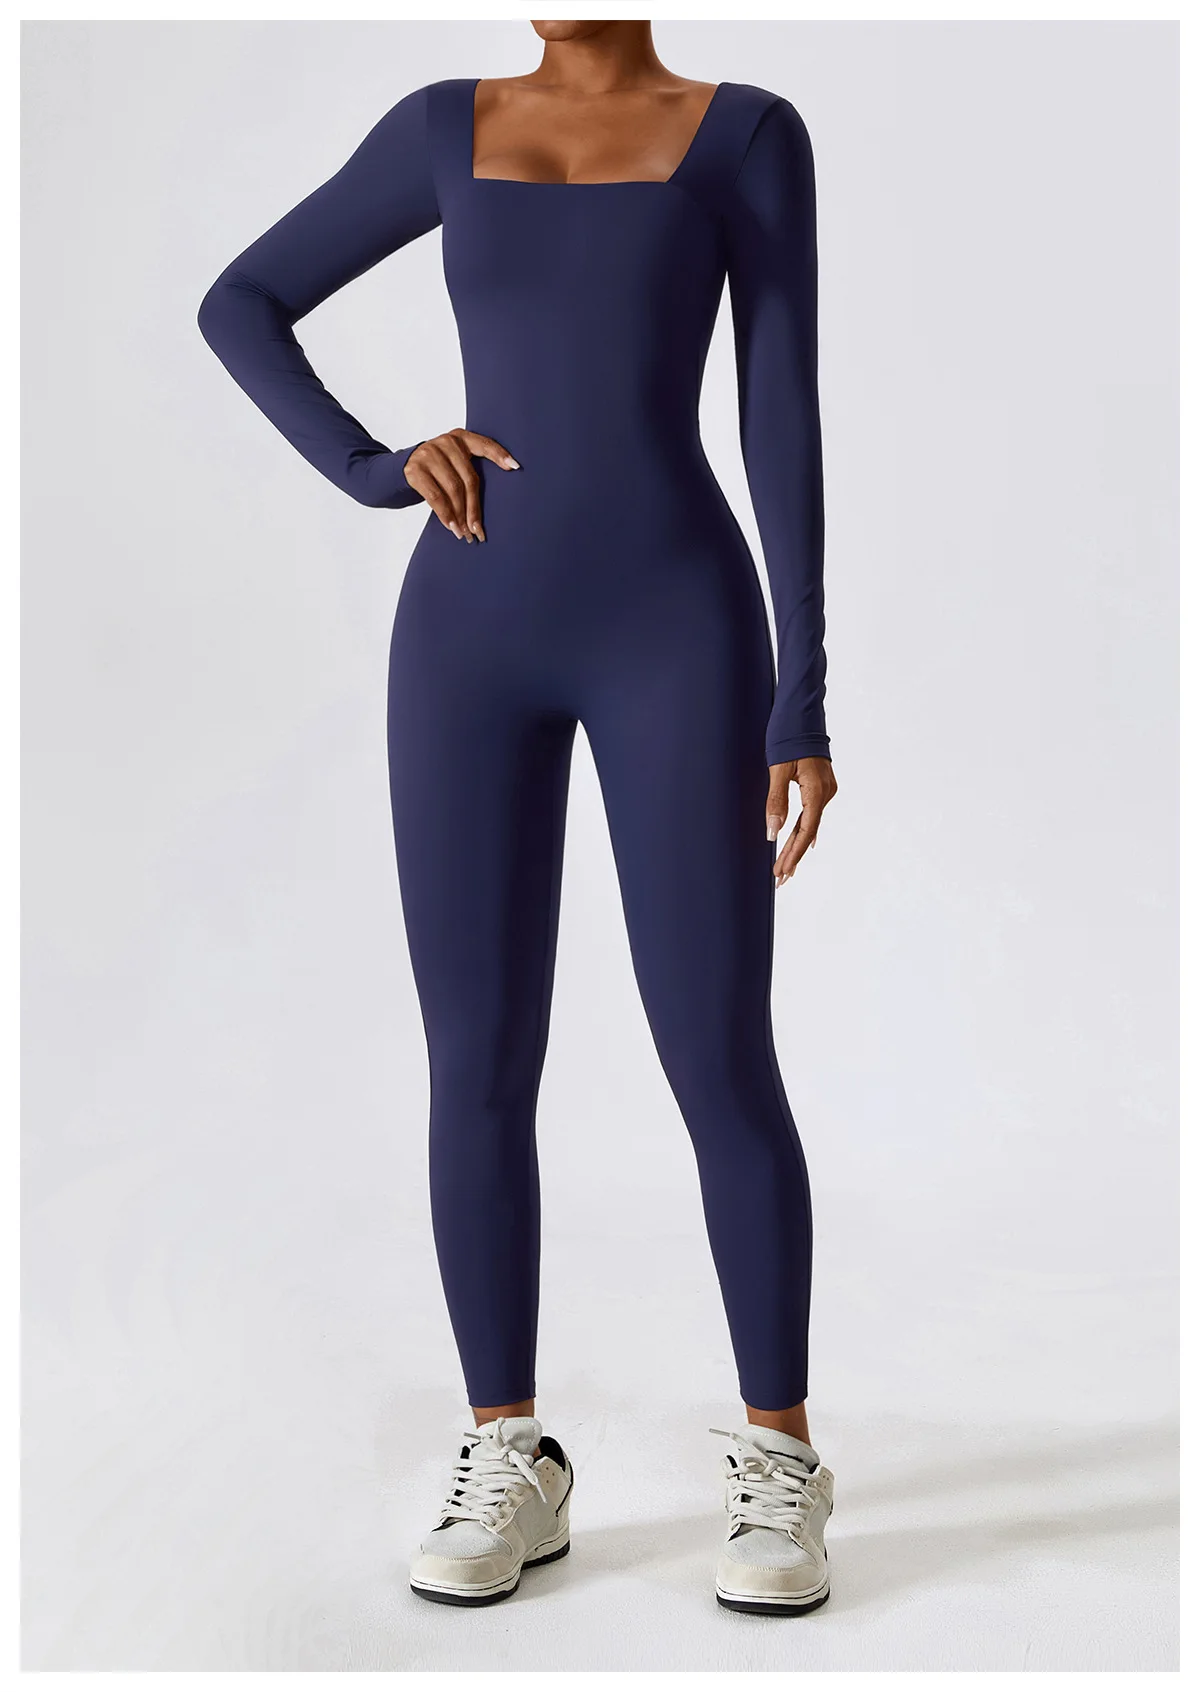 Hingto Designer Custom Nylon Women Fitness Compression Jumpsuit Mujer ...